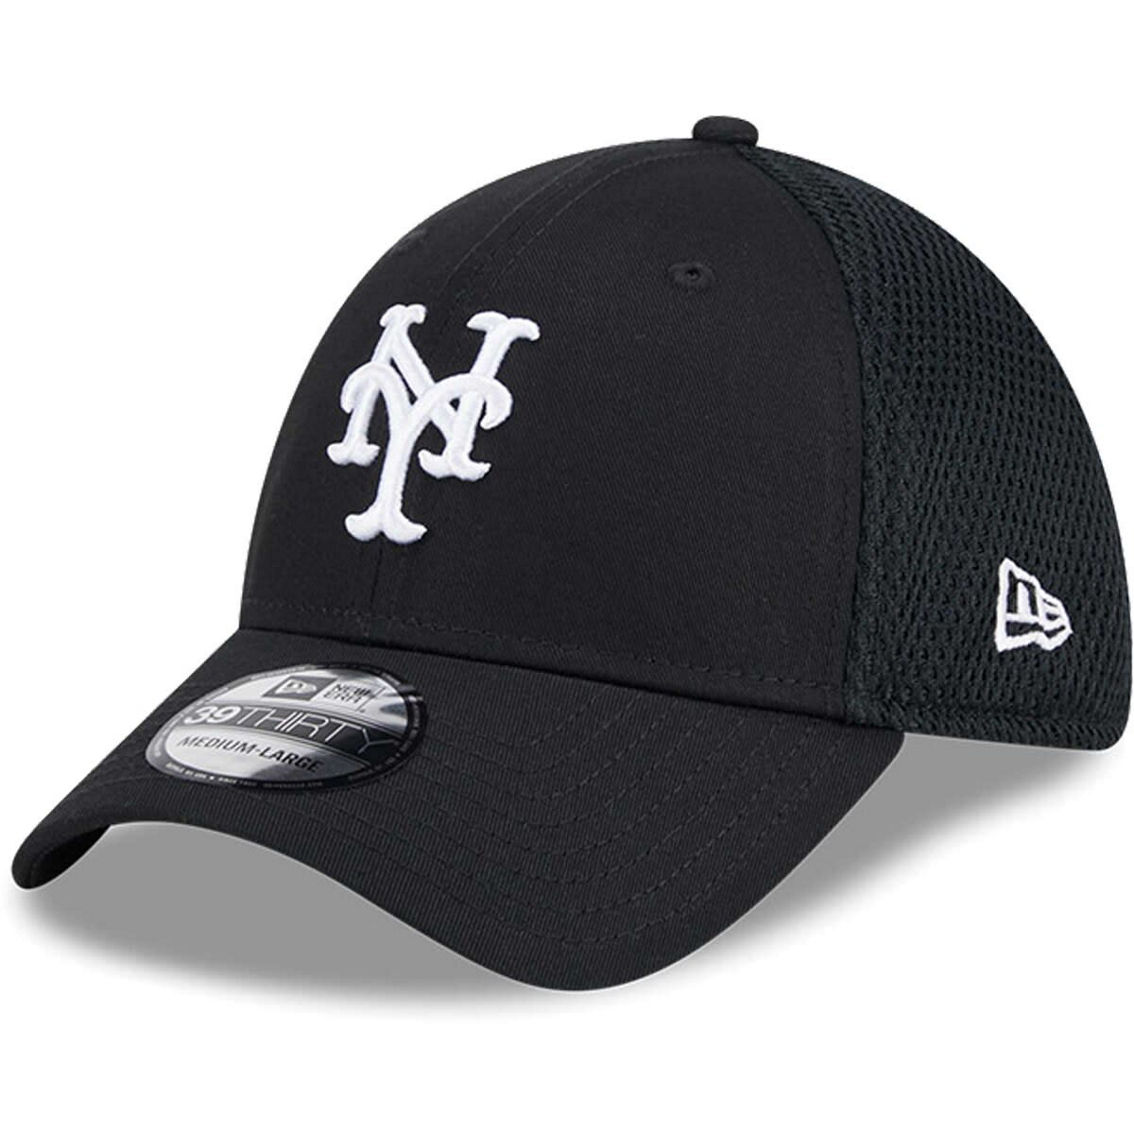 New Era Men's New York Mets Evergreen Black & White Neo 39THIRTY Flex Hat - Image 2 of 4